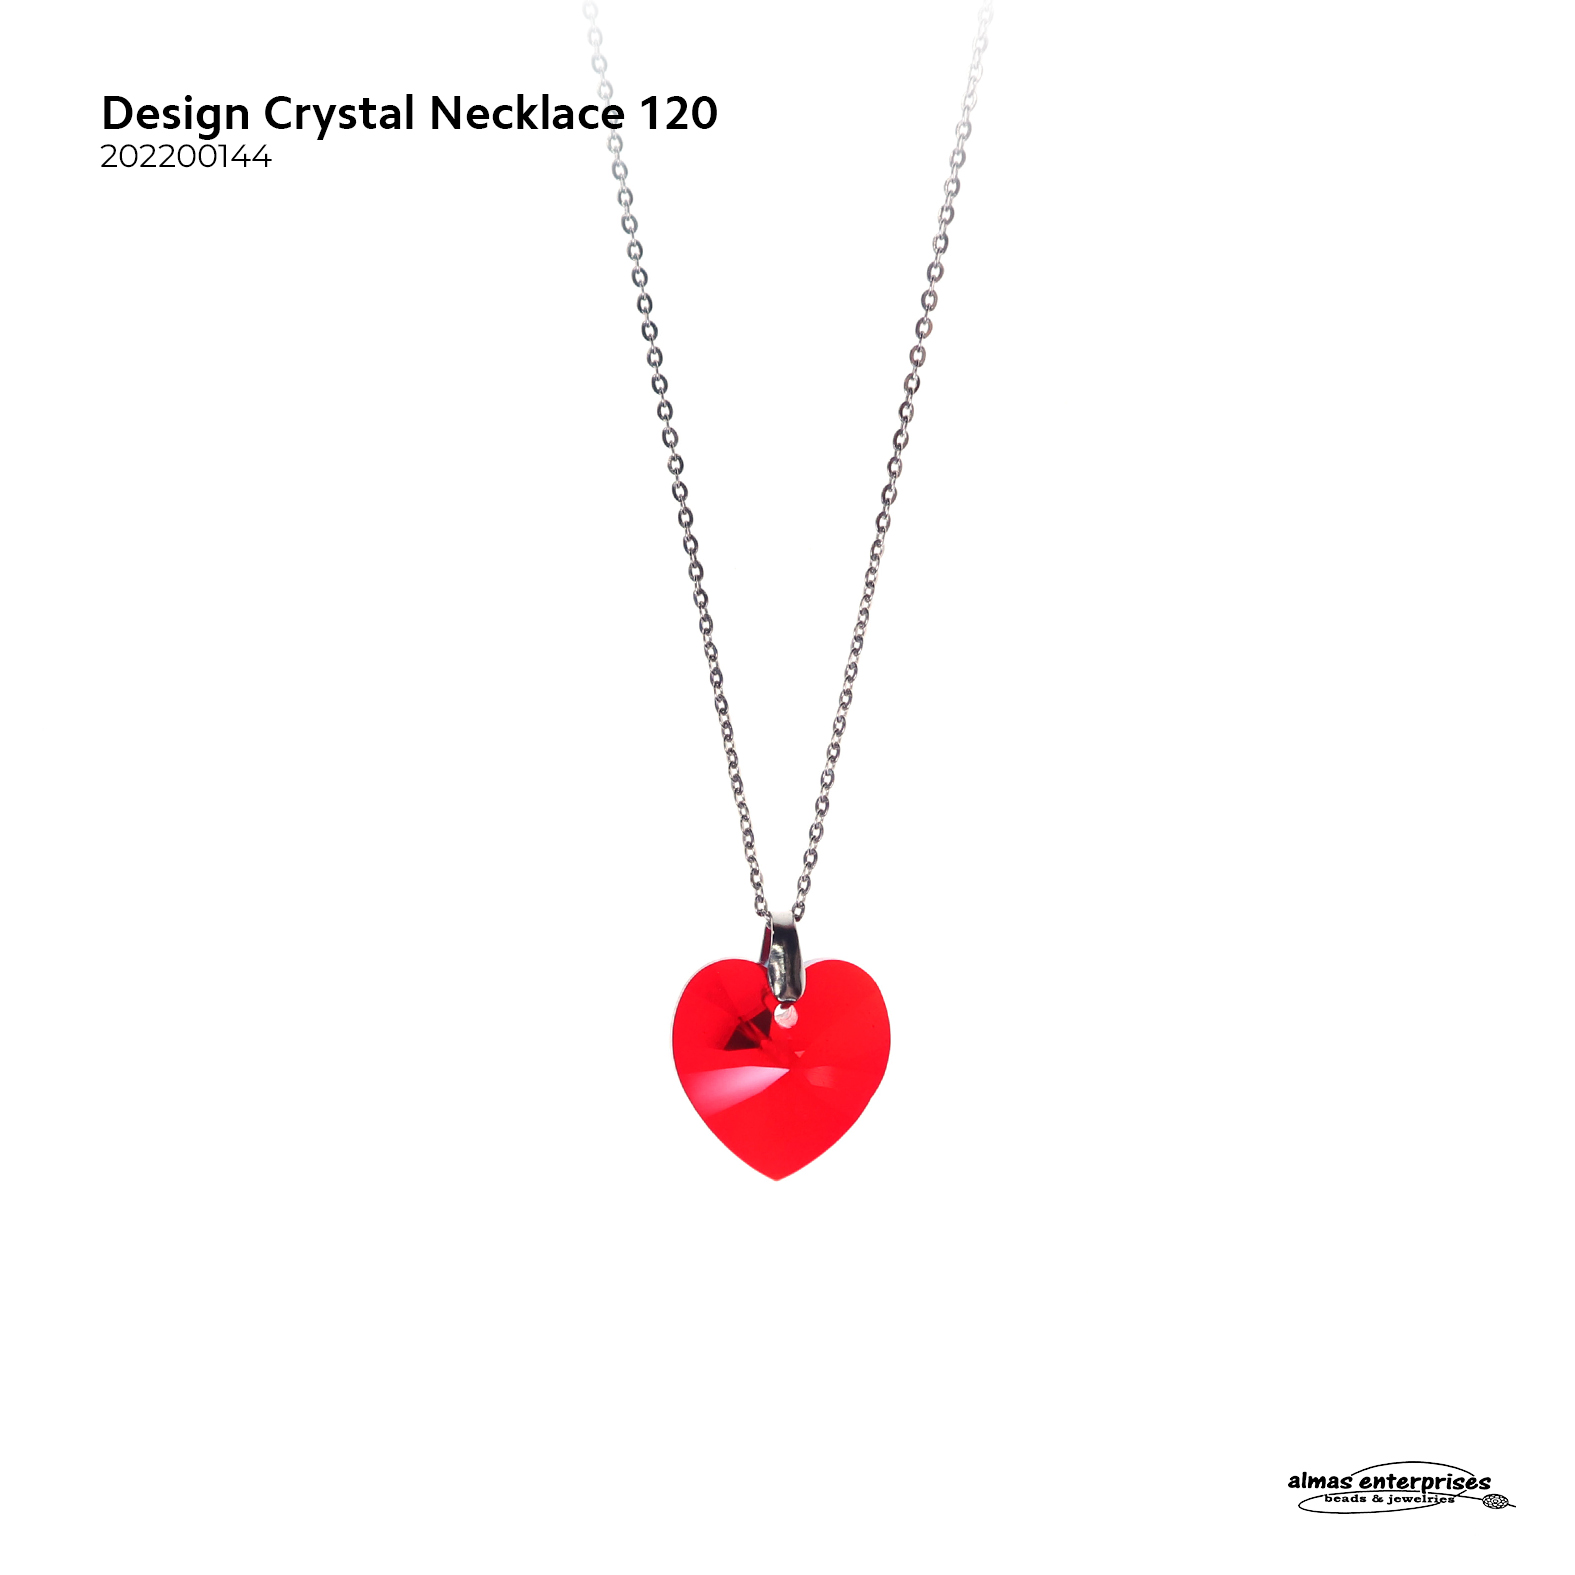 Design Crystal Necklace 120